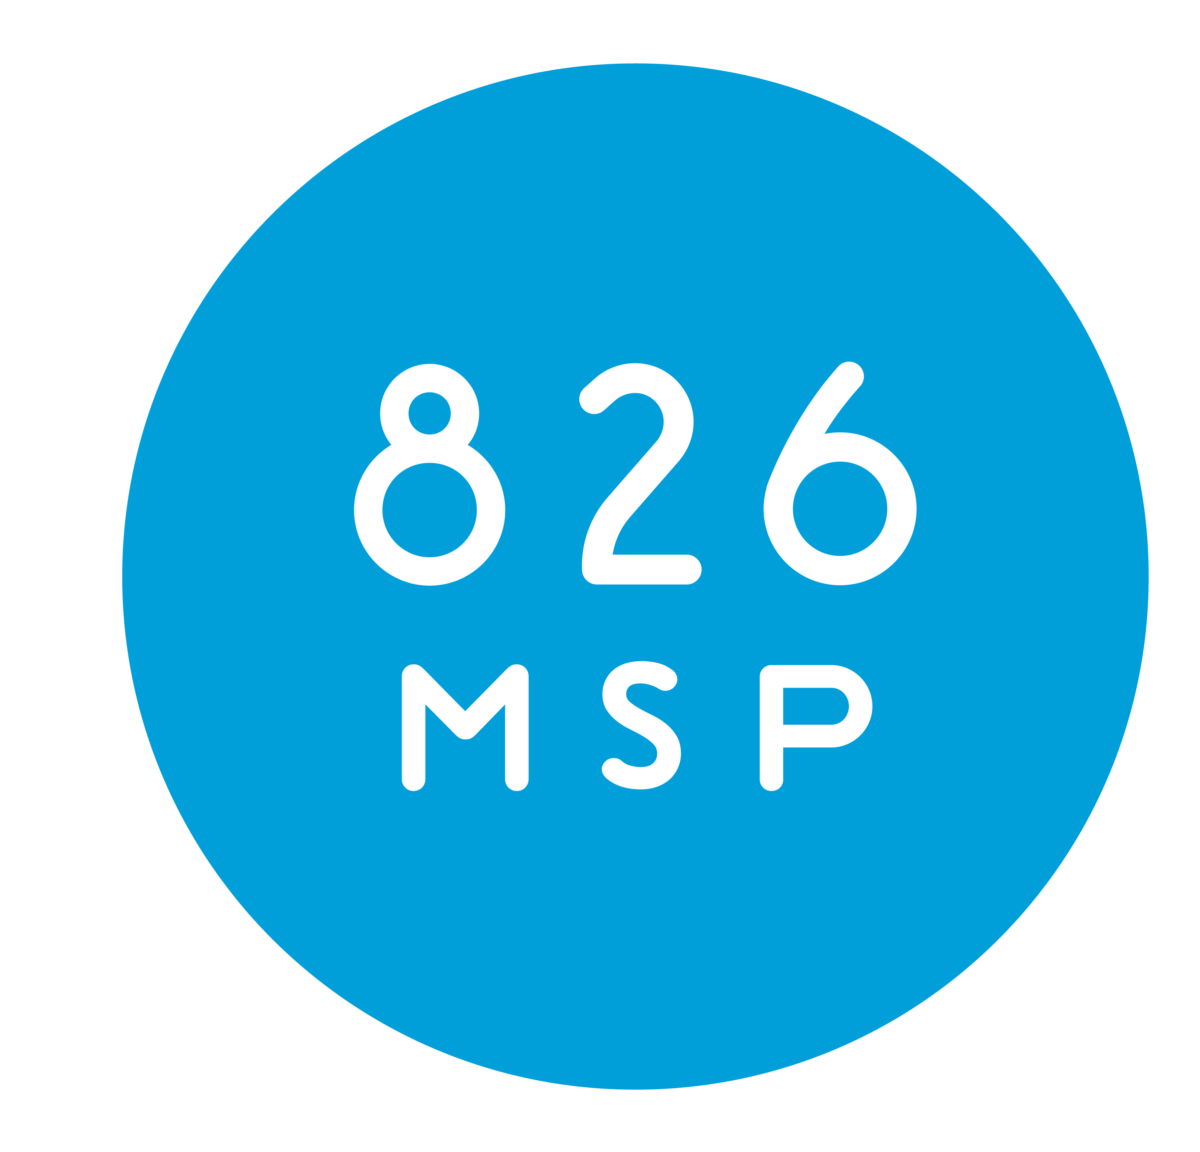 Blue circle that says "826 MSP"